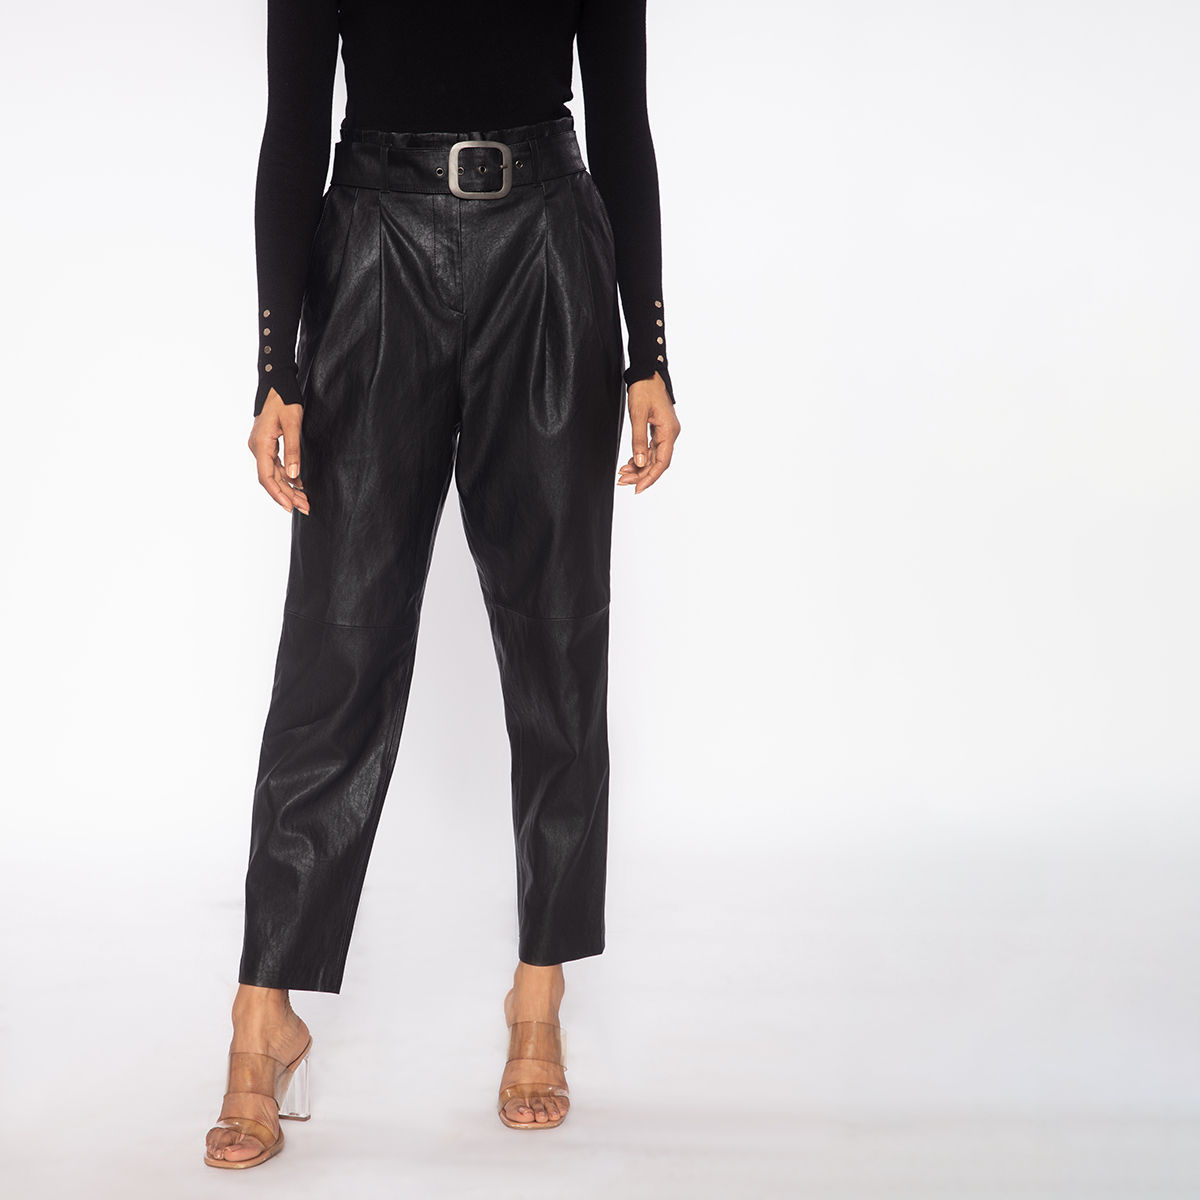 HugMefashion 6 Pocket Leather Ladies Pant in Black Color LPT7